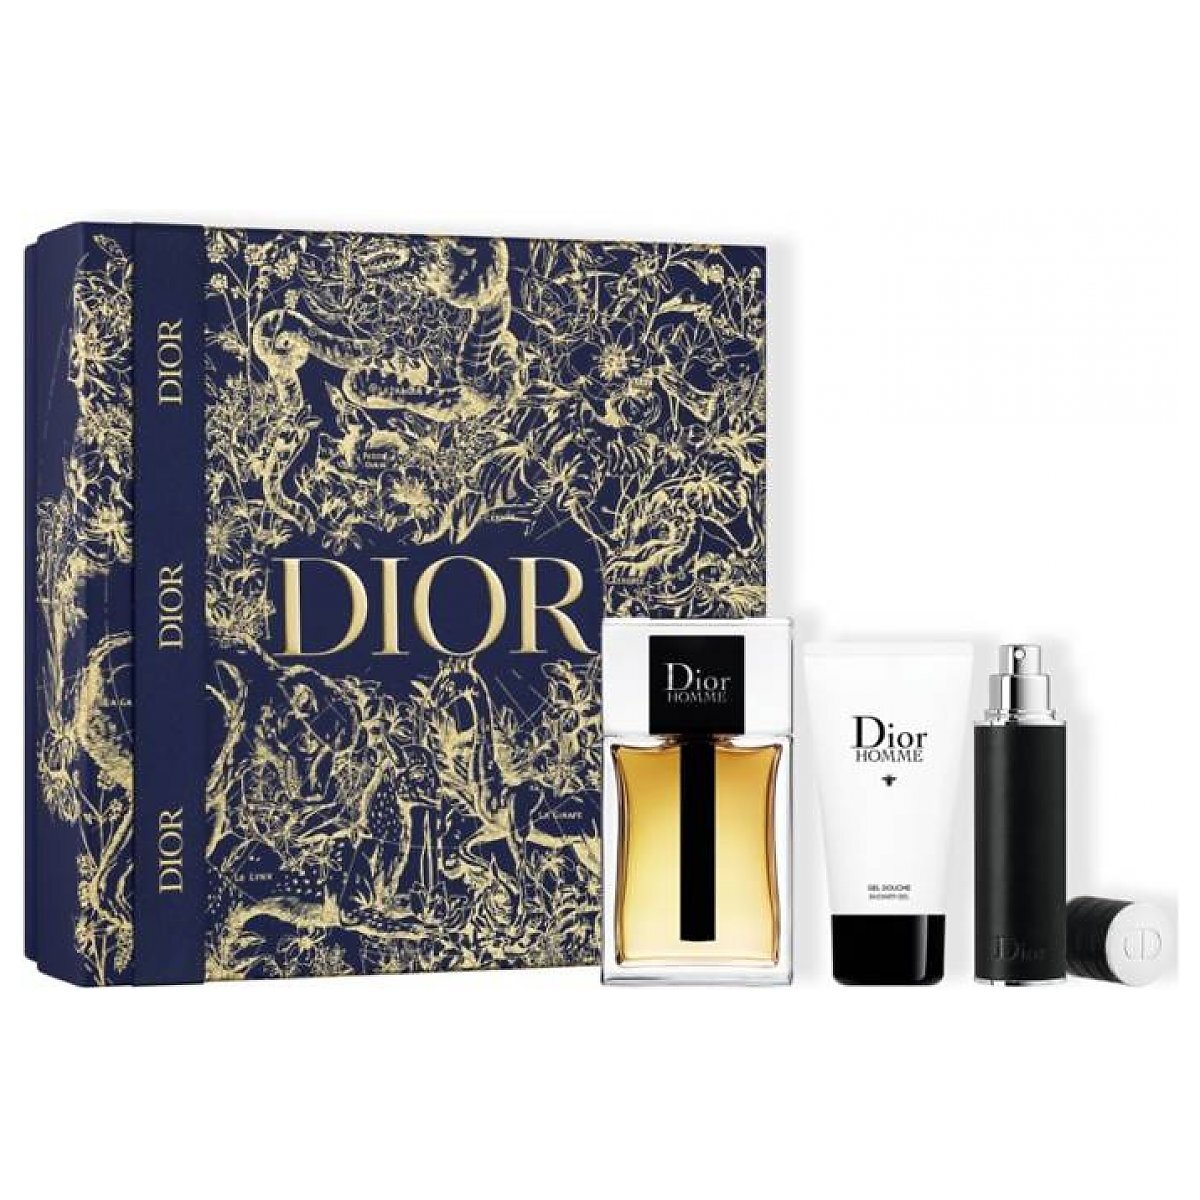 Moje ULUBIONE Eleganckie Perfumy  DIOR HOMME PARFUM  Porównanie z Dior  Homme Intense  YouTube